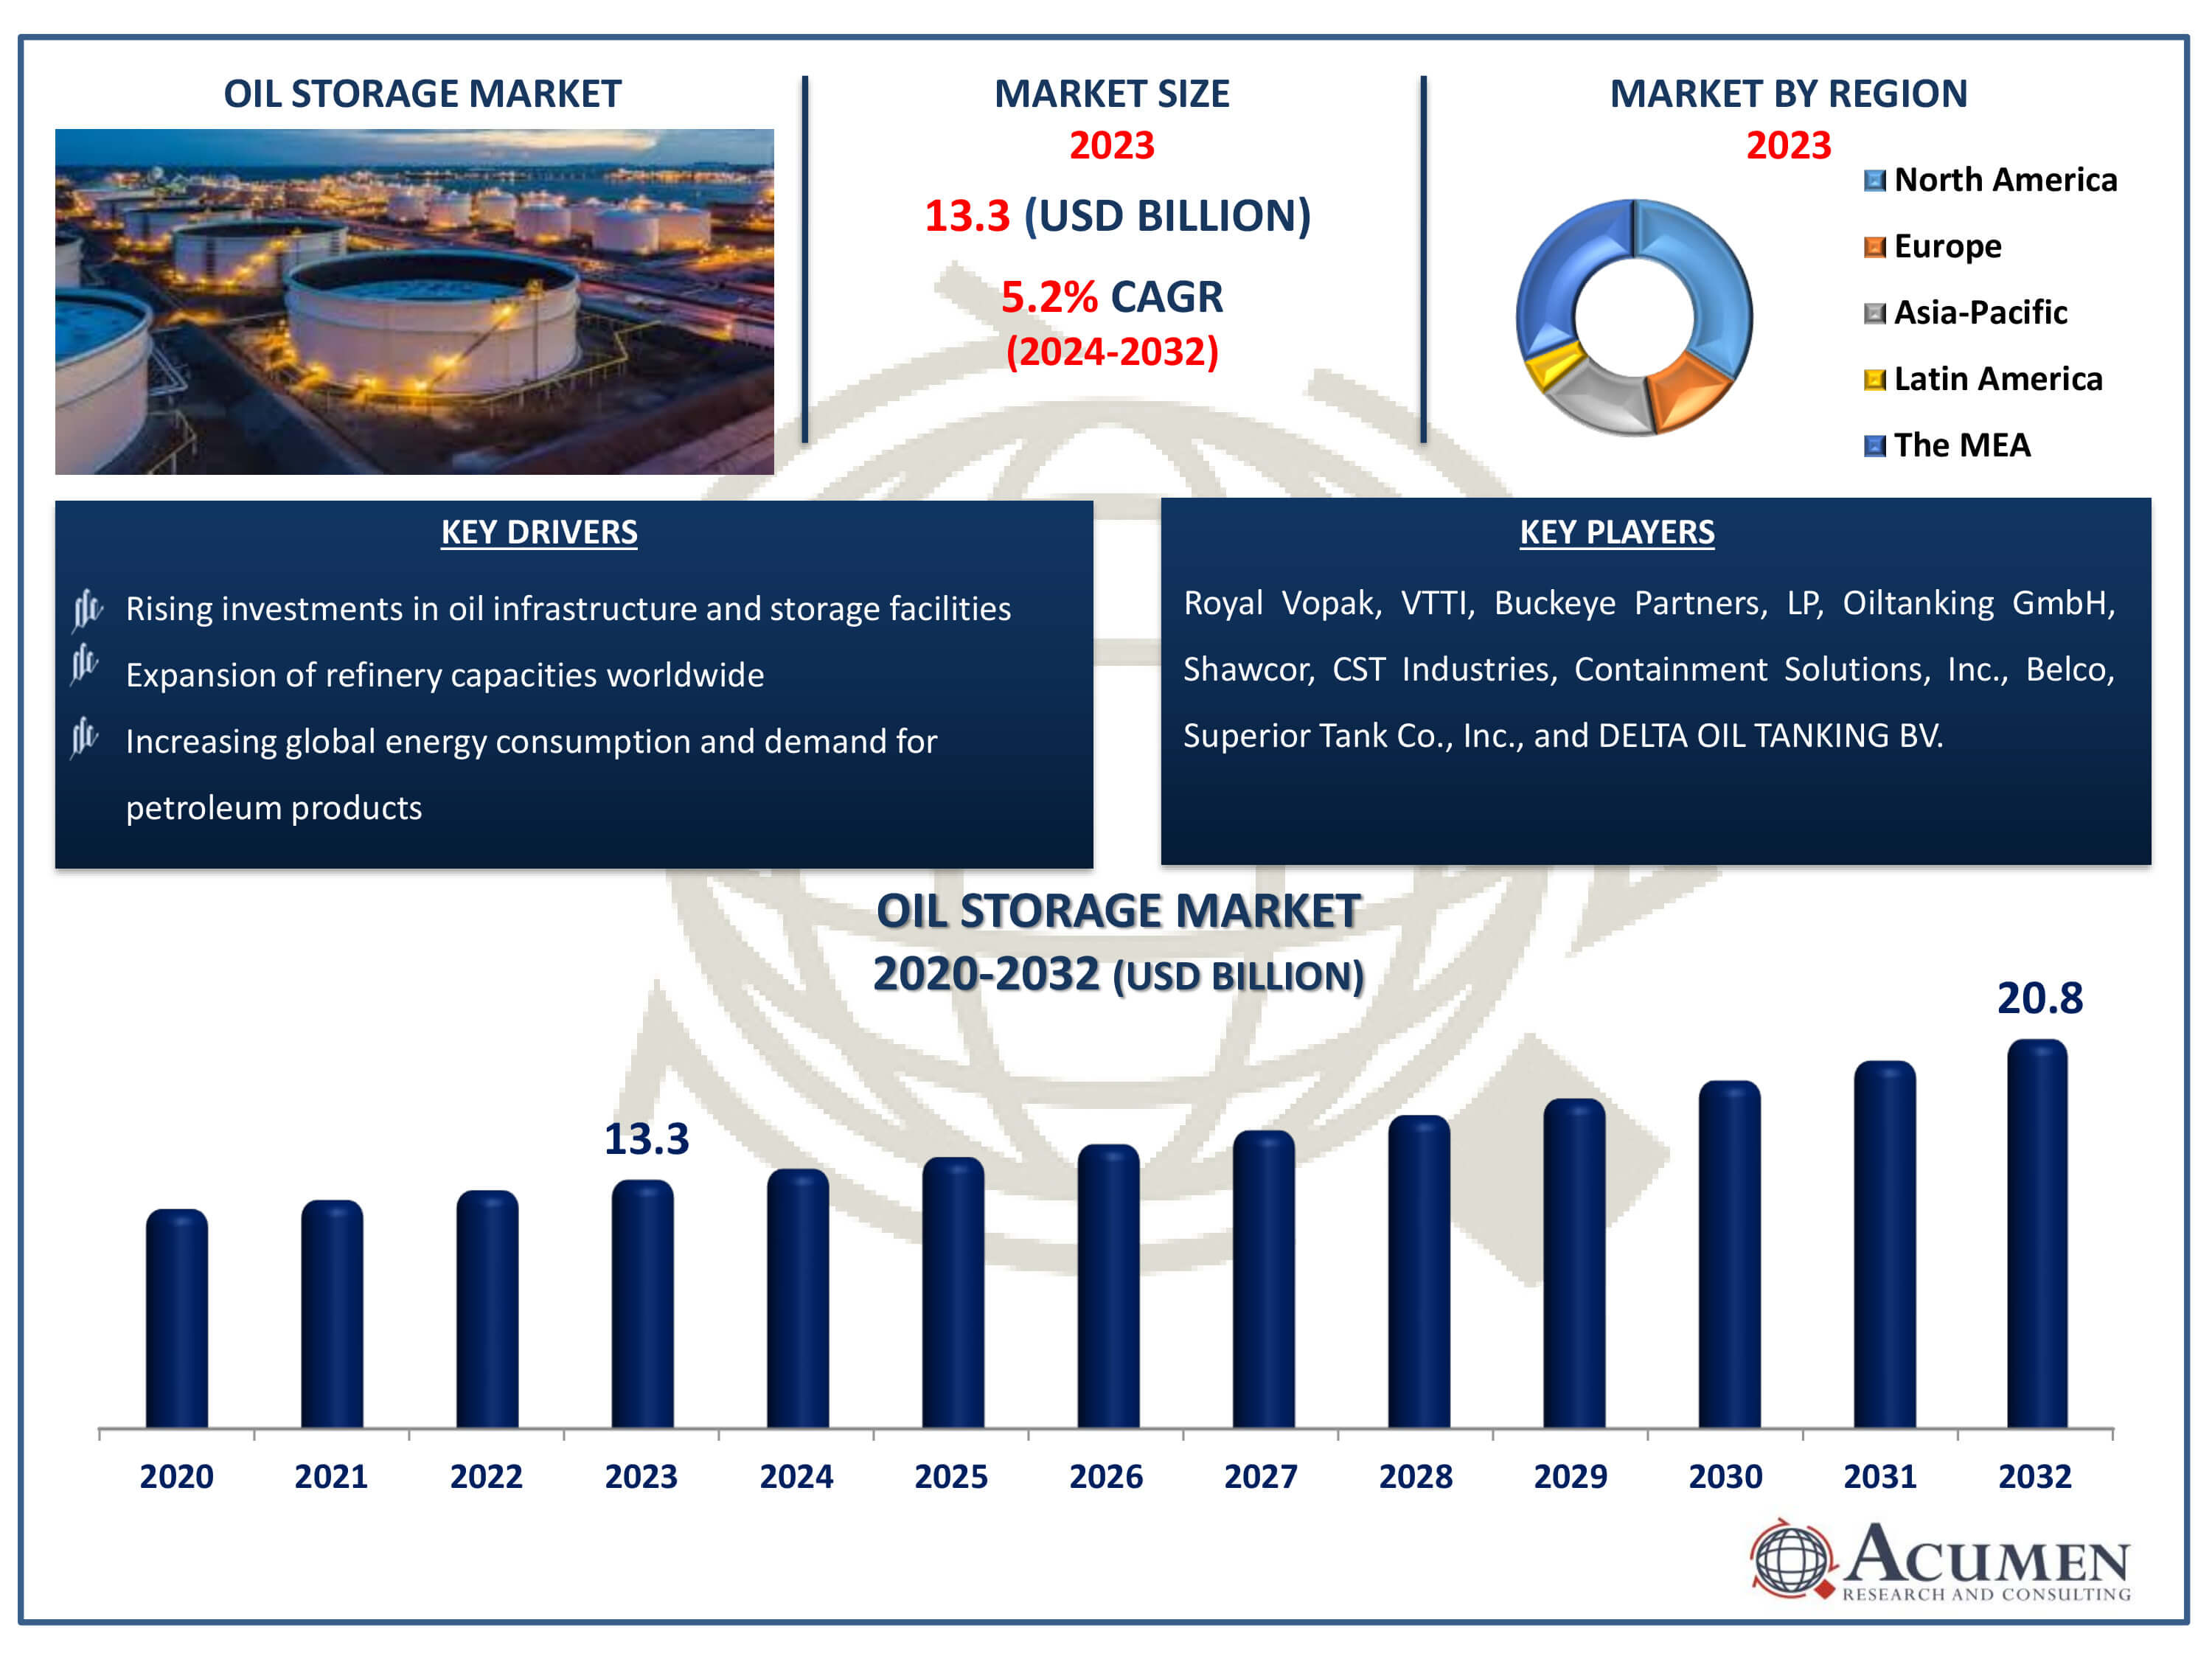 Oil Storage Market Dynamics